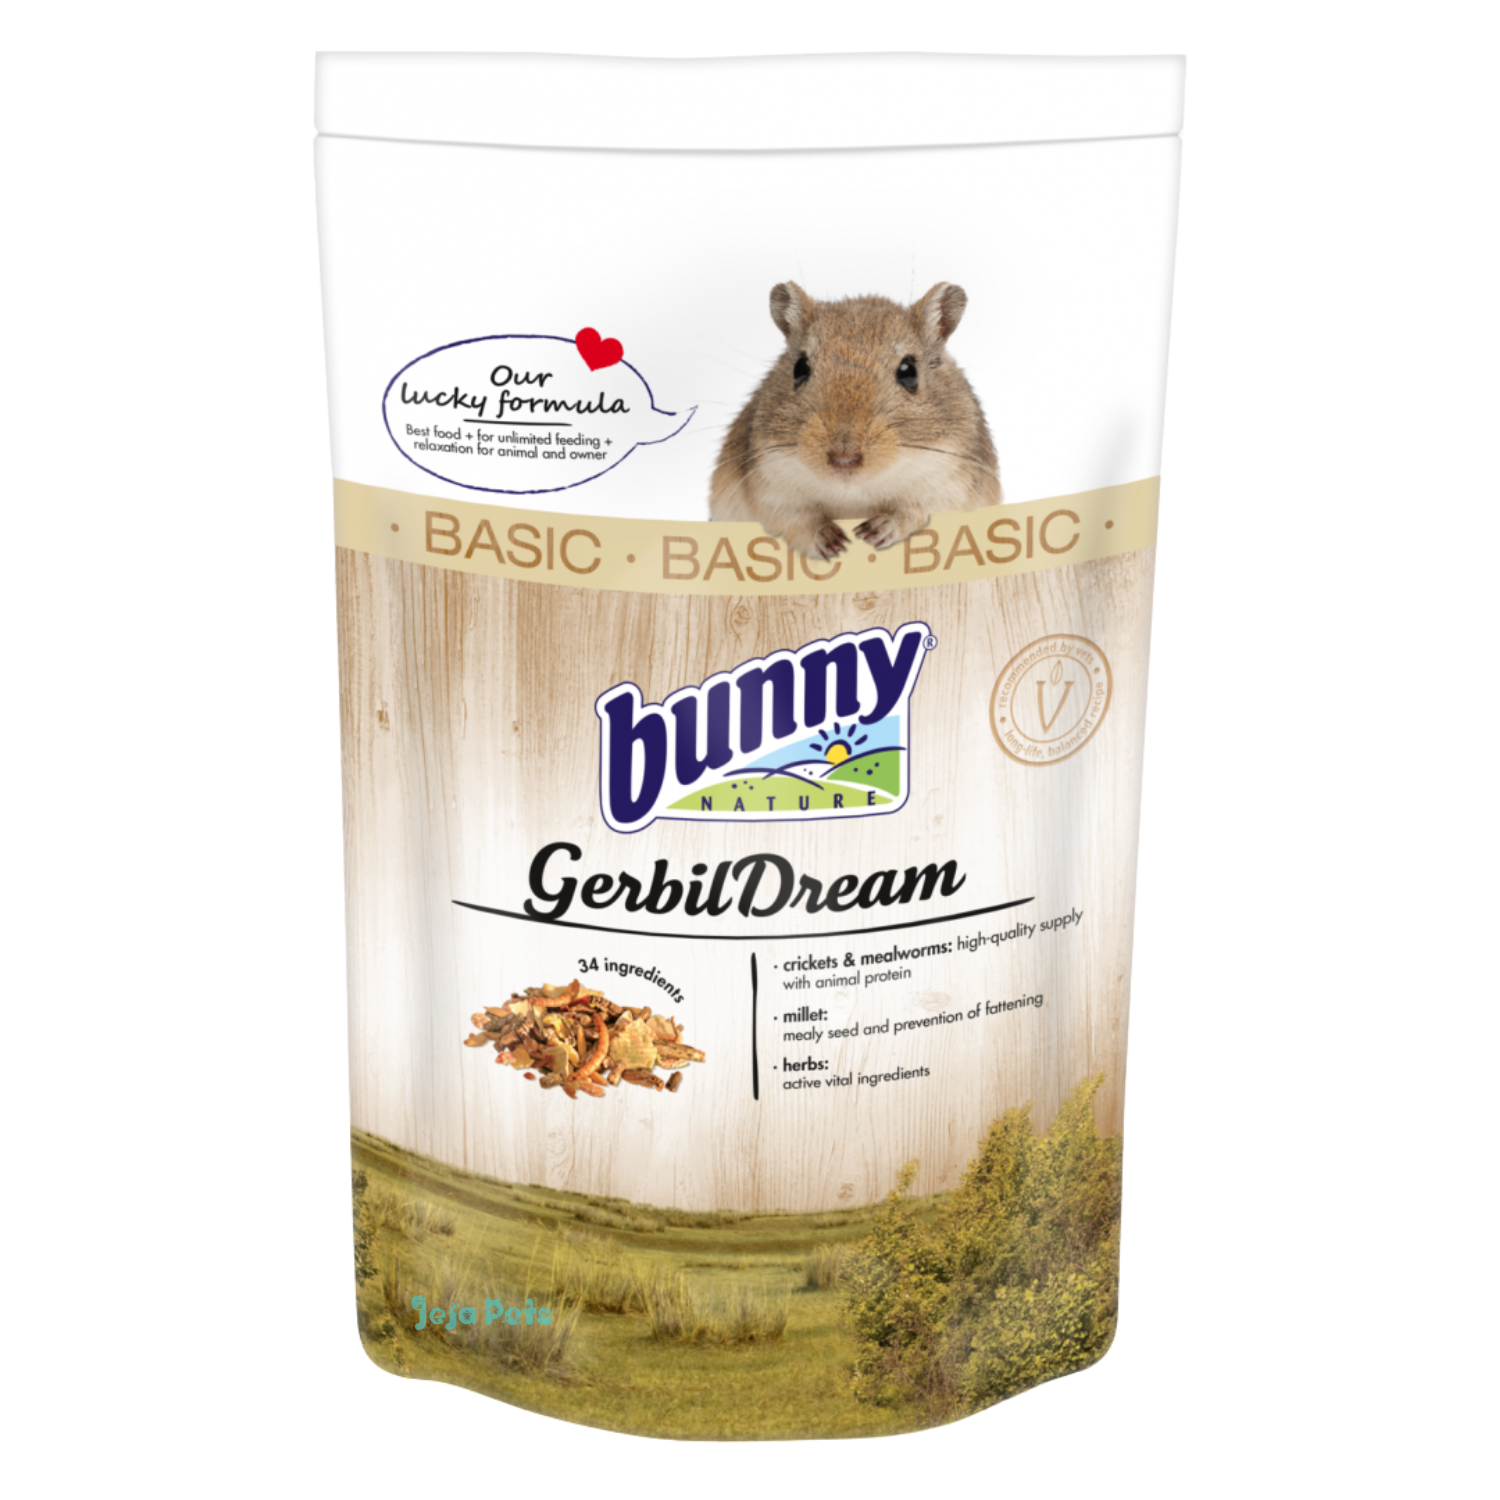 Bunny Nature Gerbil Dream Basic - 600g